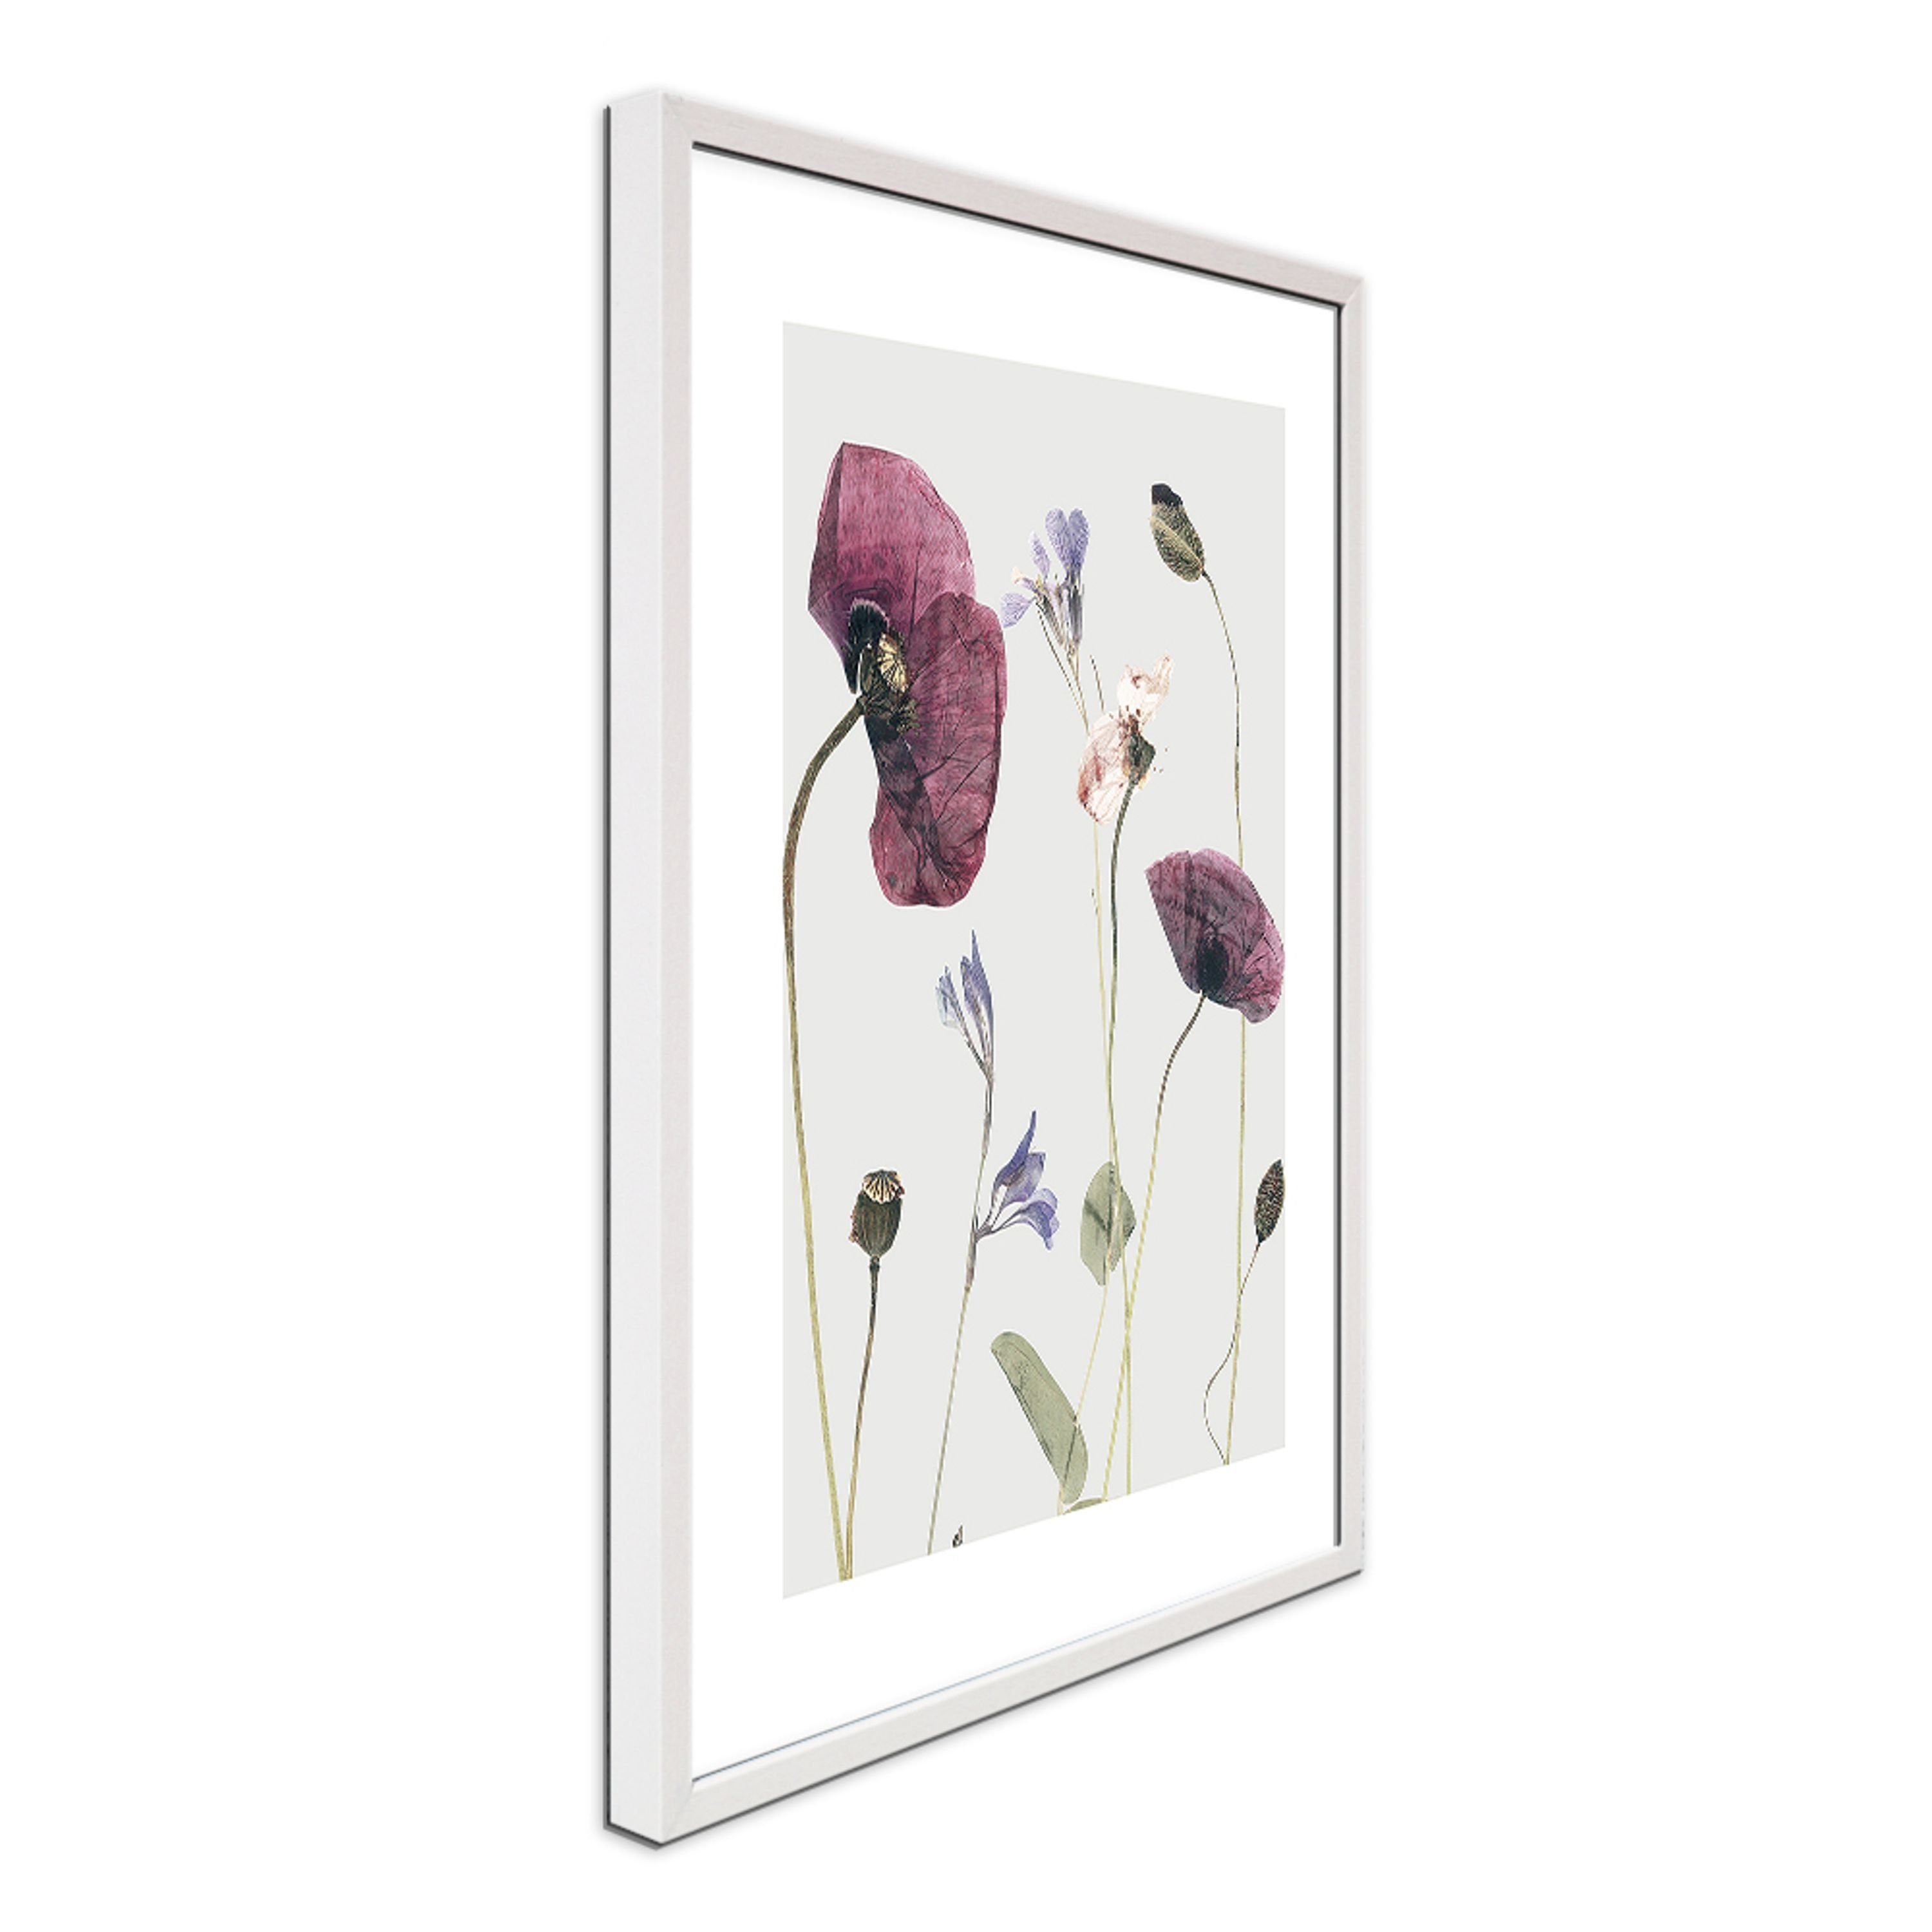 gerahmt 51x41cm mit / Holz-Rahmen Bild artissimo Klatsch-Mohn Mohn-Blumen, mit Design-Poster Rahmen Bild I / Trocken-Blumen: